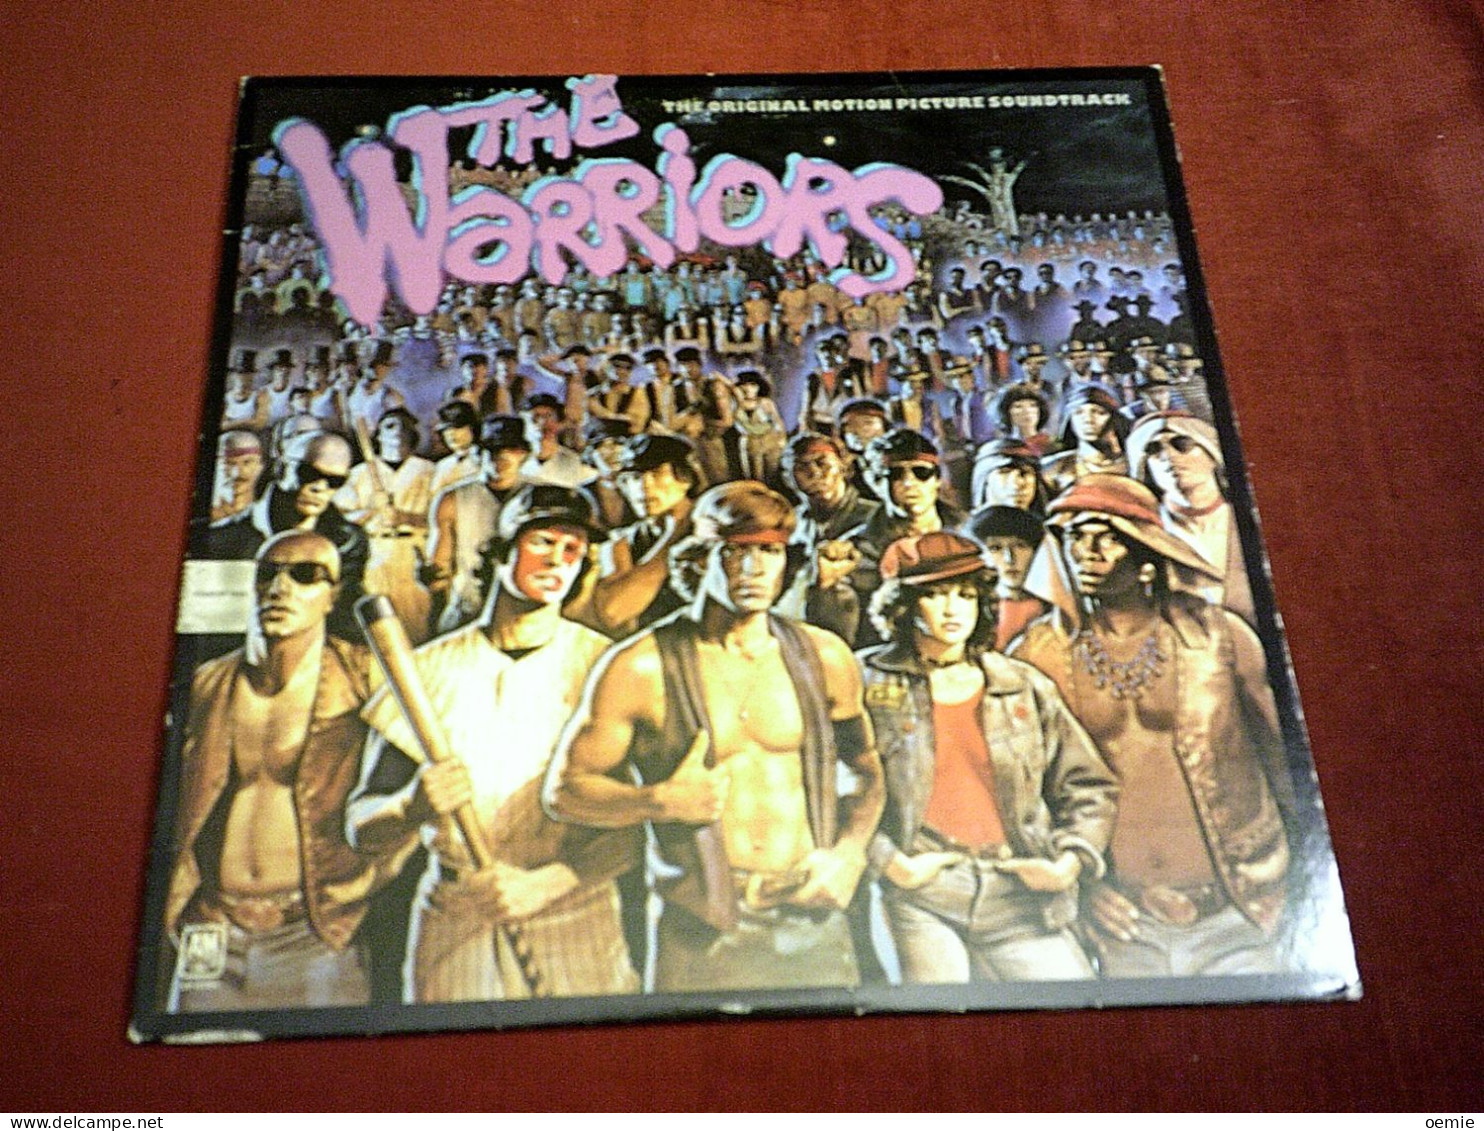 THE WARRIORS - Soundtracks, Film Music